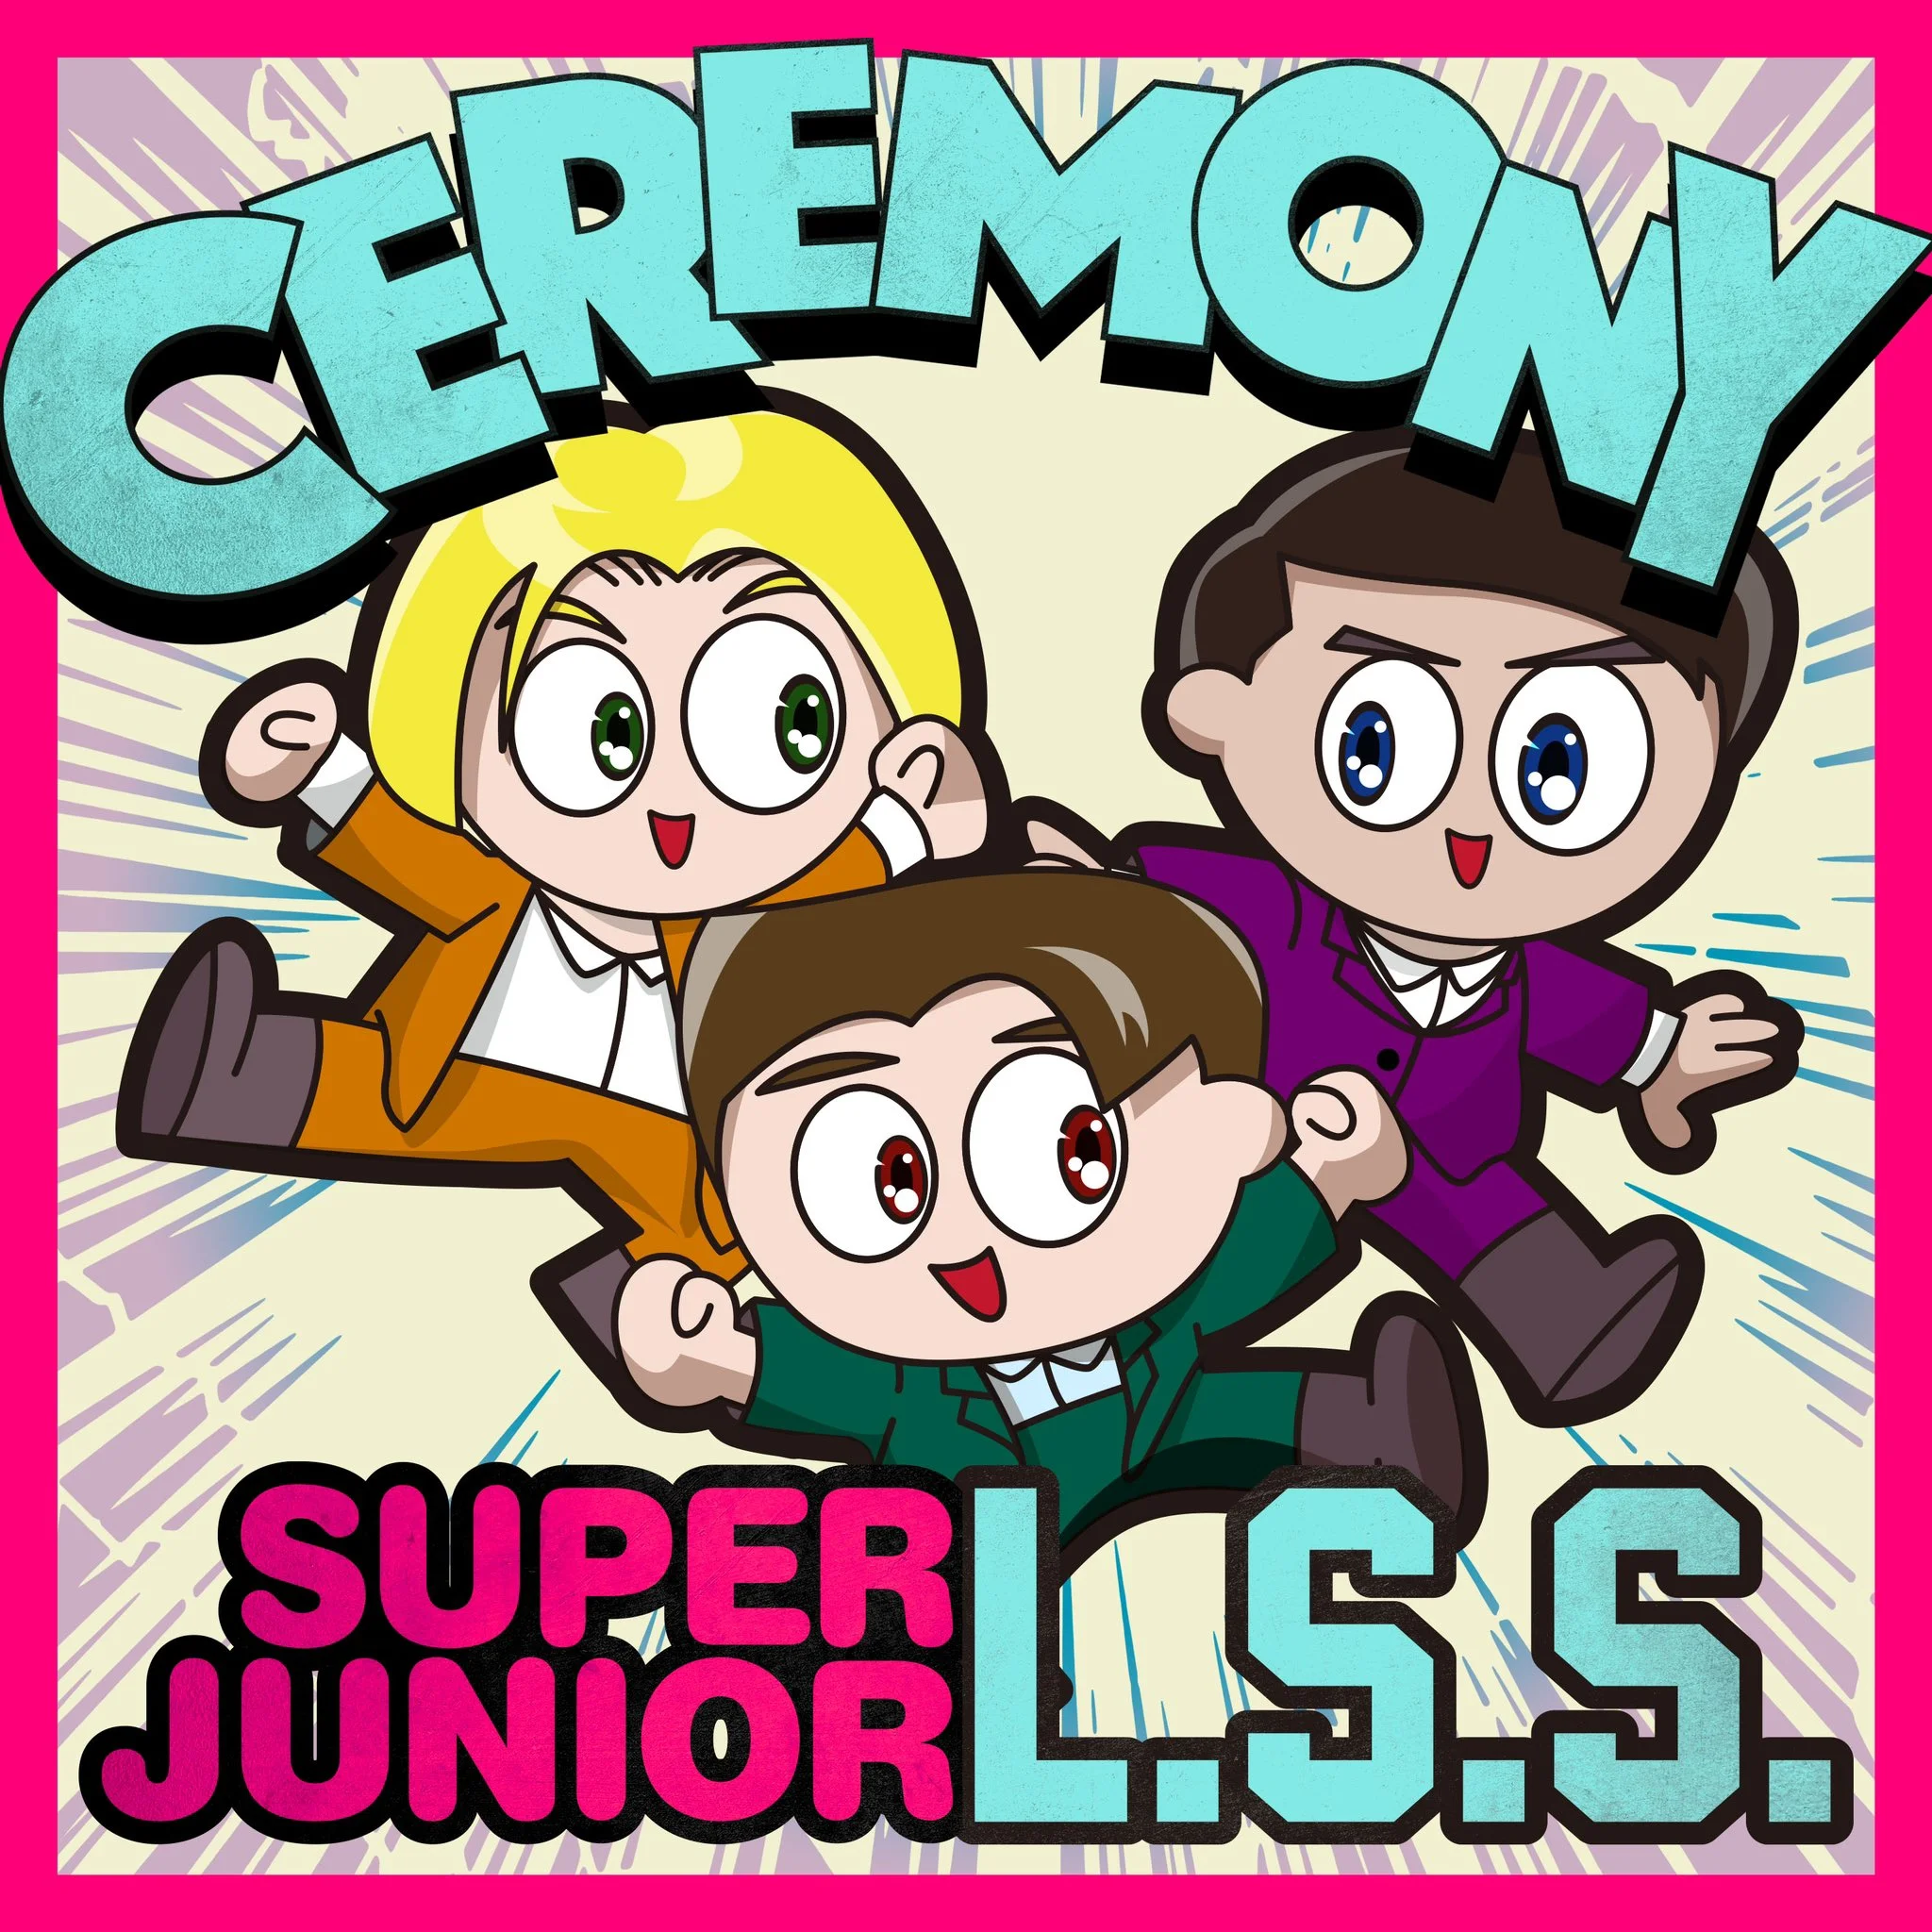 SUPER JUNIOR-L.S.S. members kpop profile (2024 updated) | kpopping